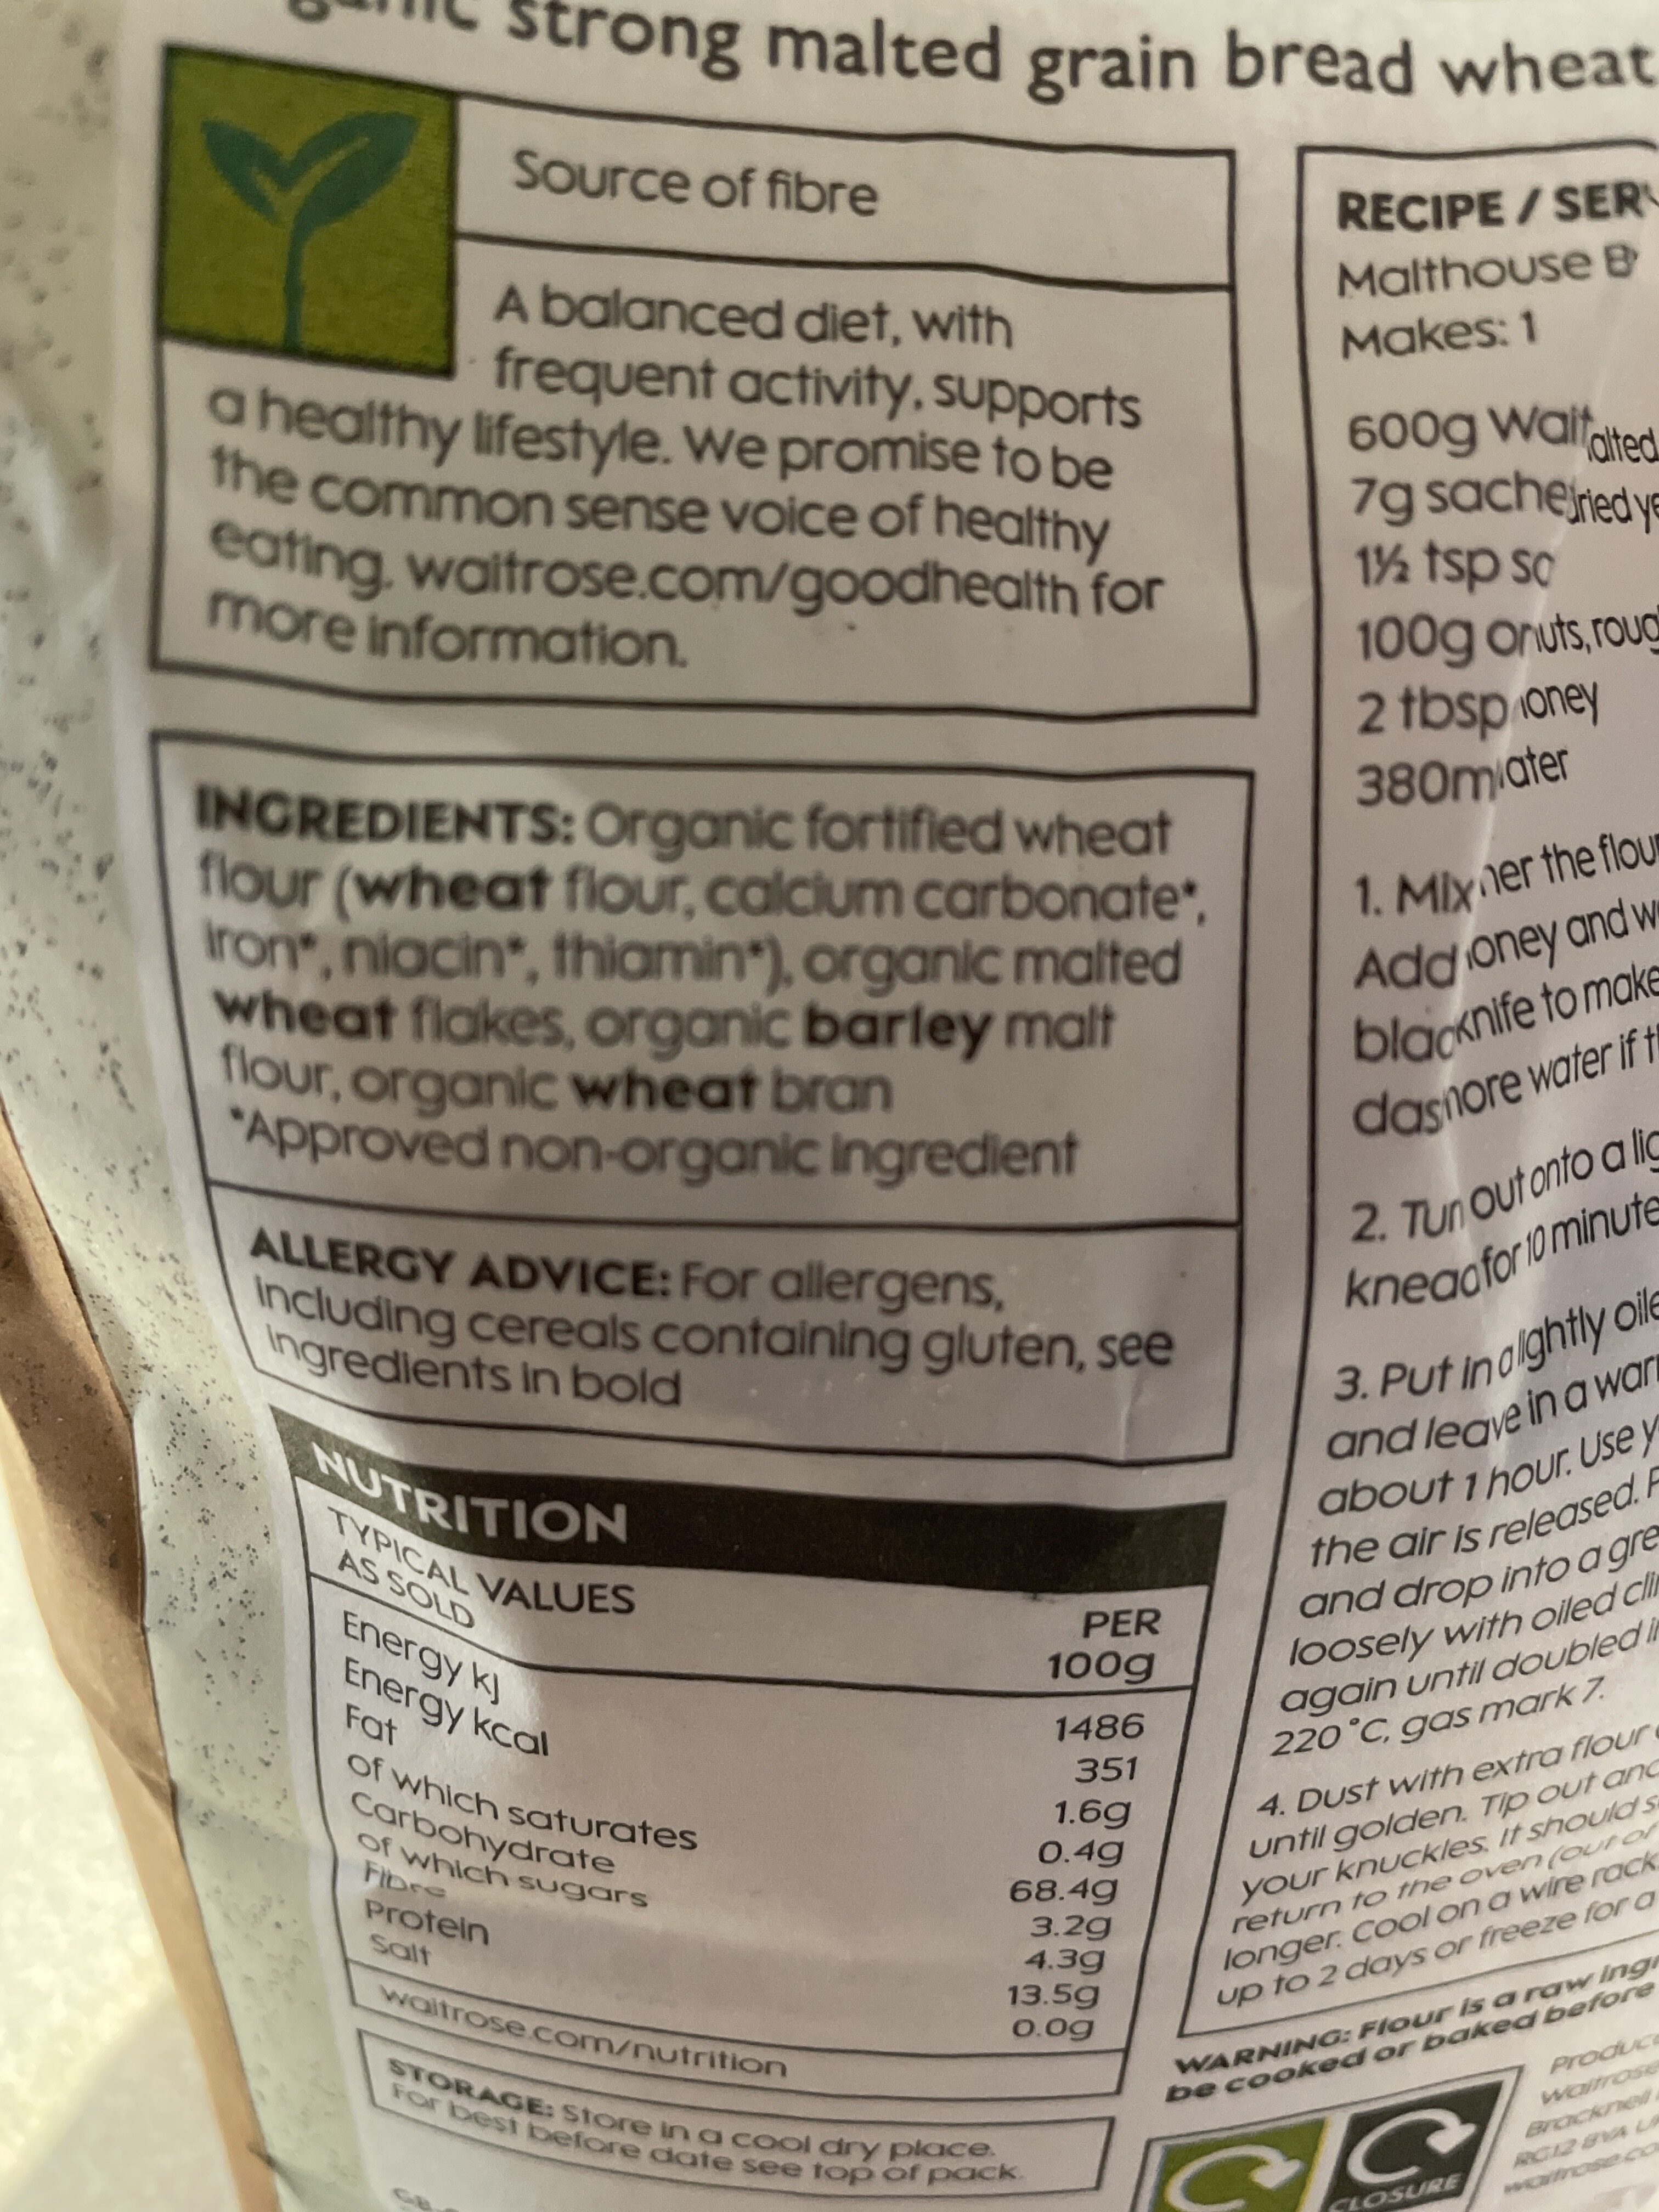 Duchy Organic Strong Malted Grain Bread Wheat Flour - Ingredients